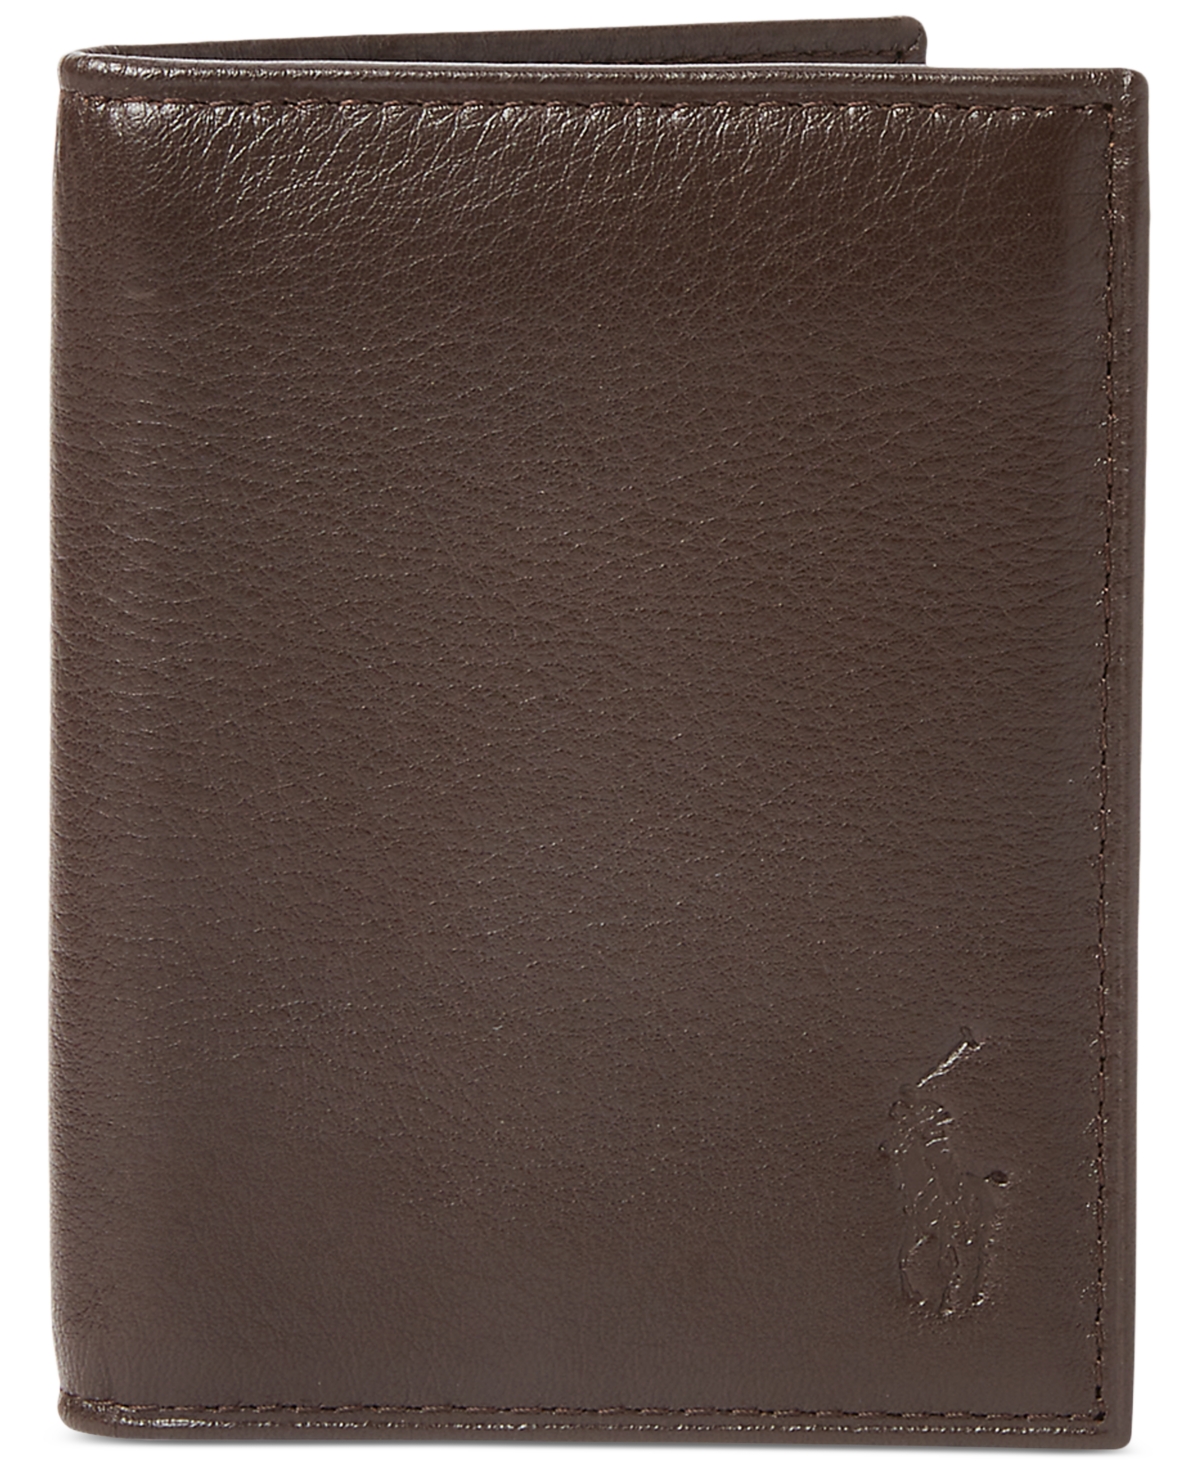 Men's Pebbled Leather Billfold - Brown